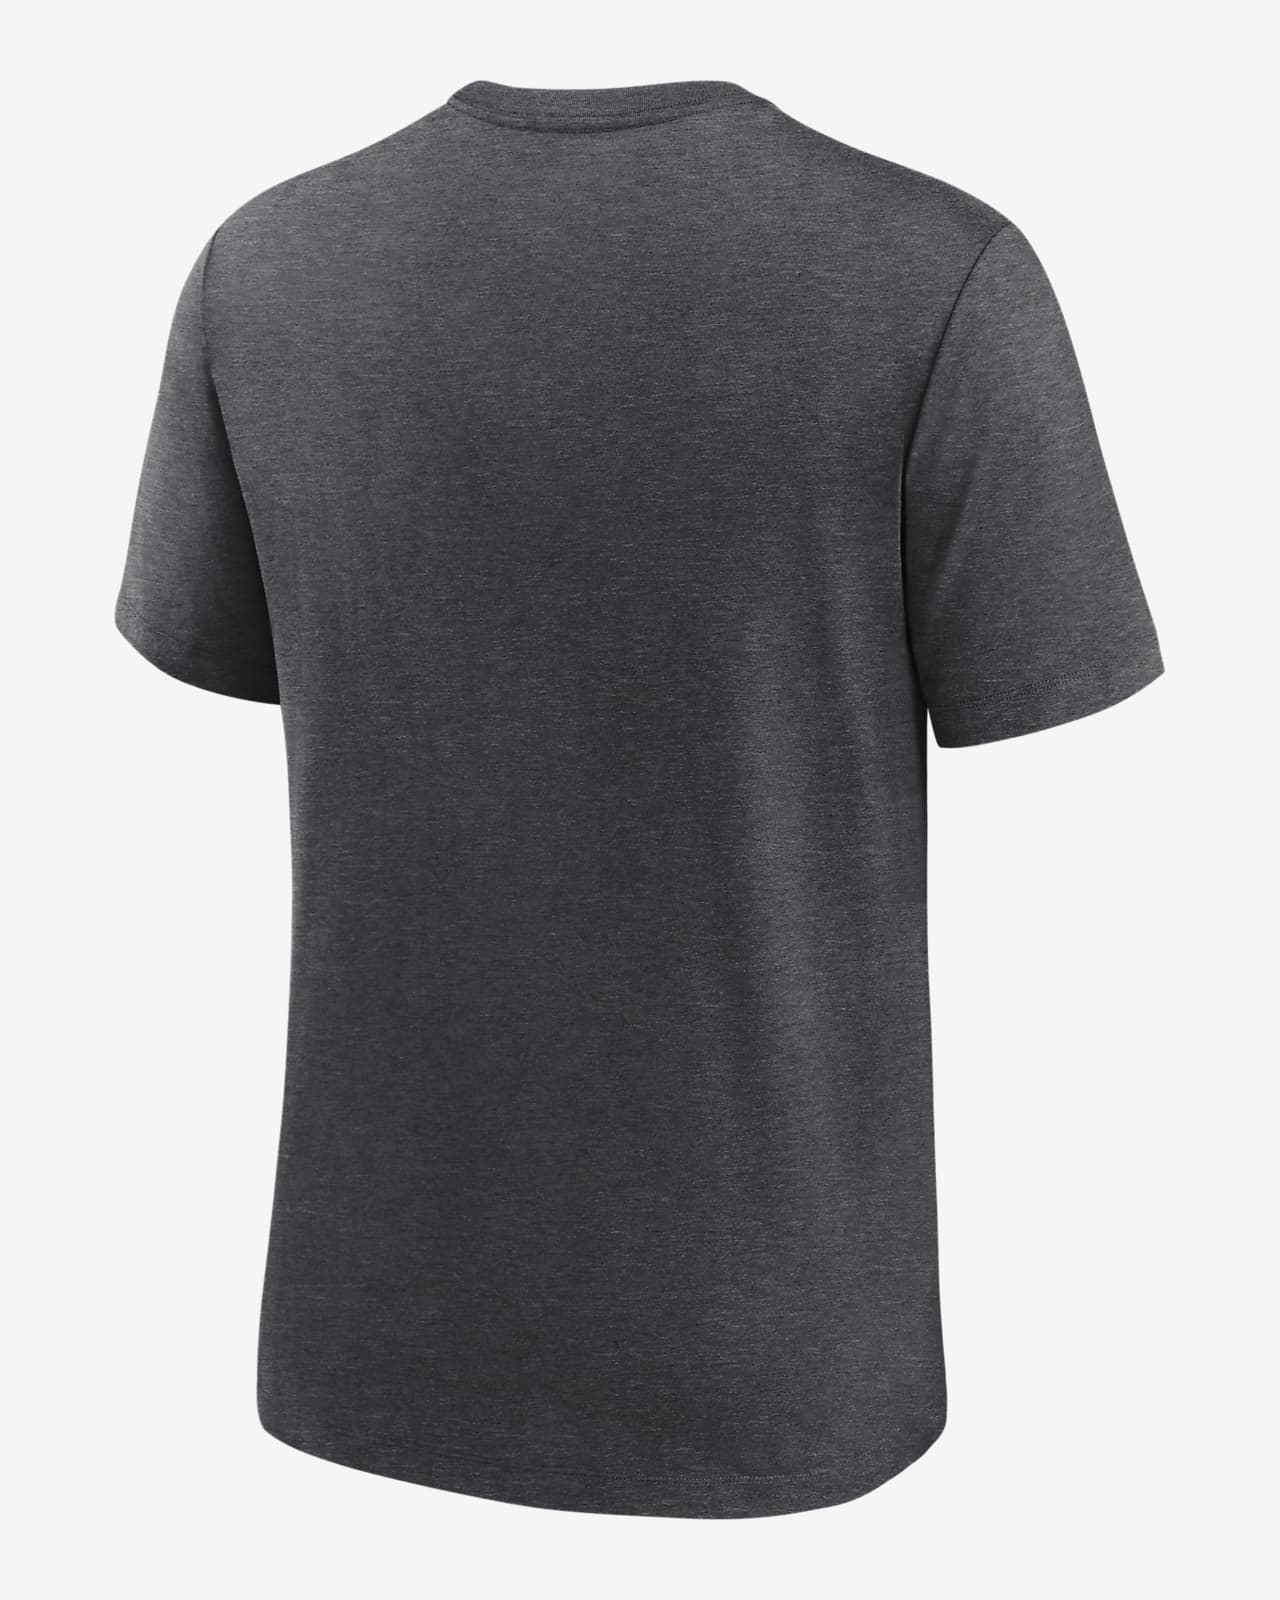 Nike Dri-FIT Velocity Practice (MLB Philadelphia Phillies) Men's T-Shirt.